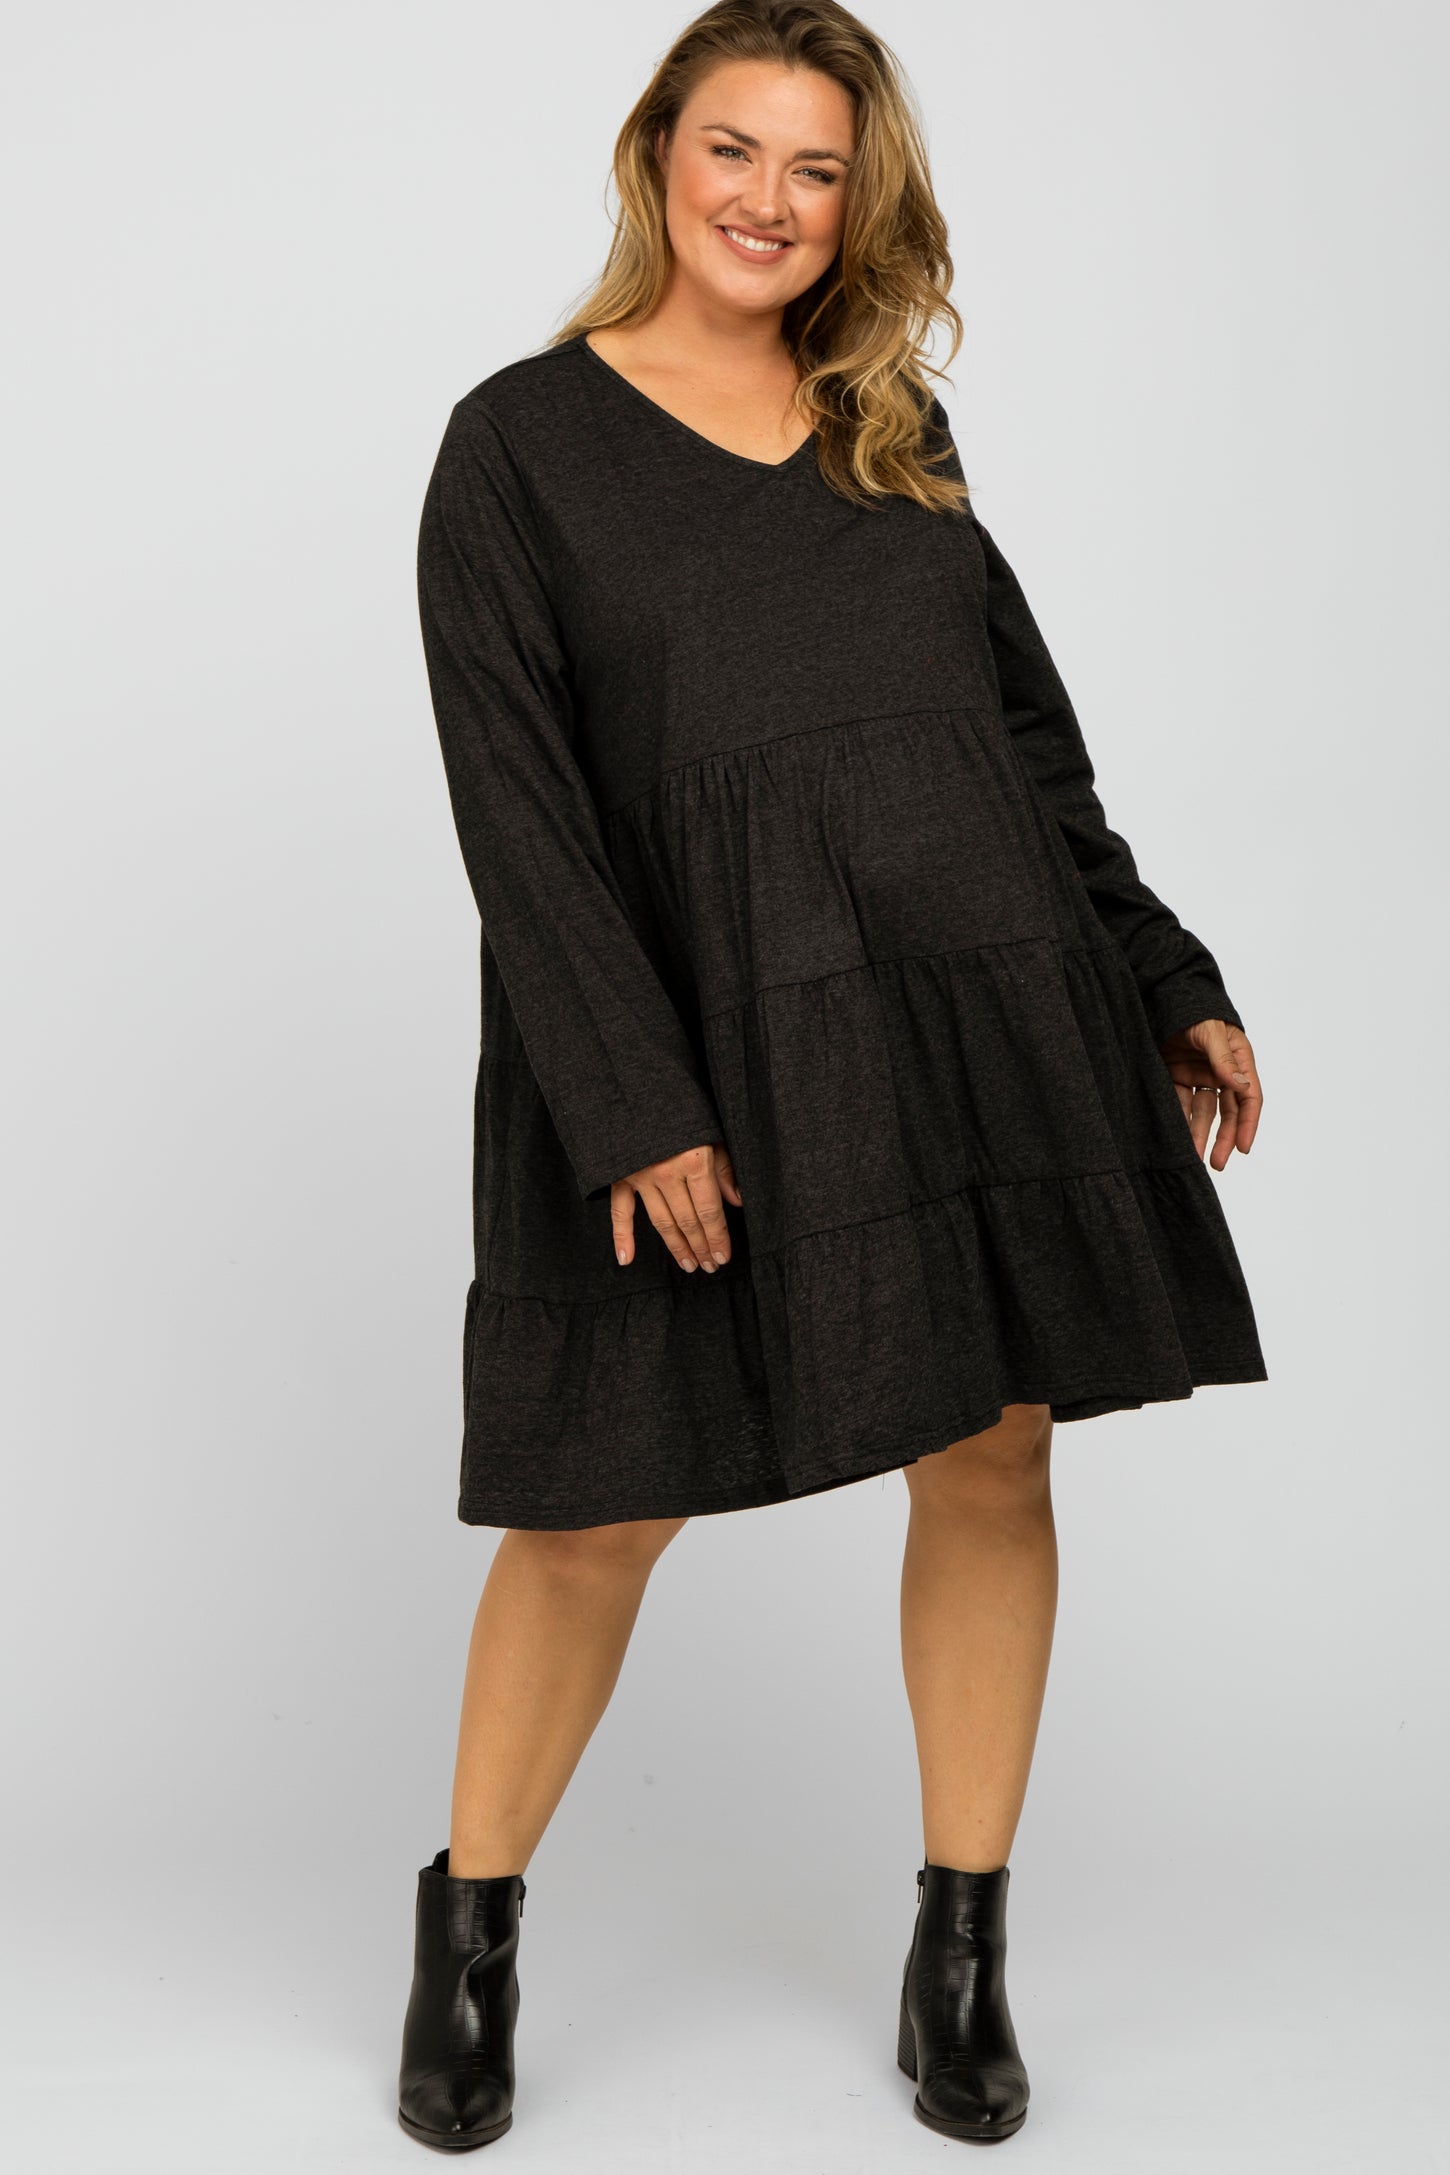 Black Soft Knit Two Tone Tiered Plus Maternity Dress